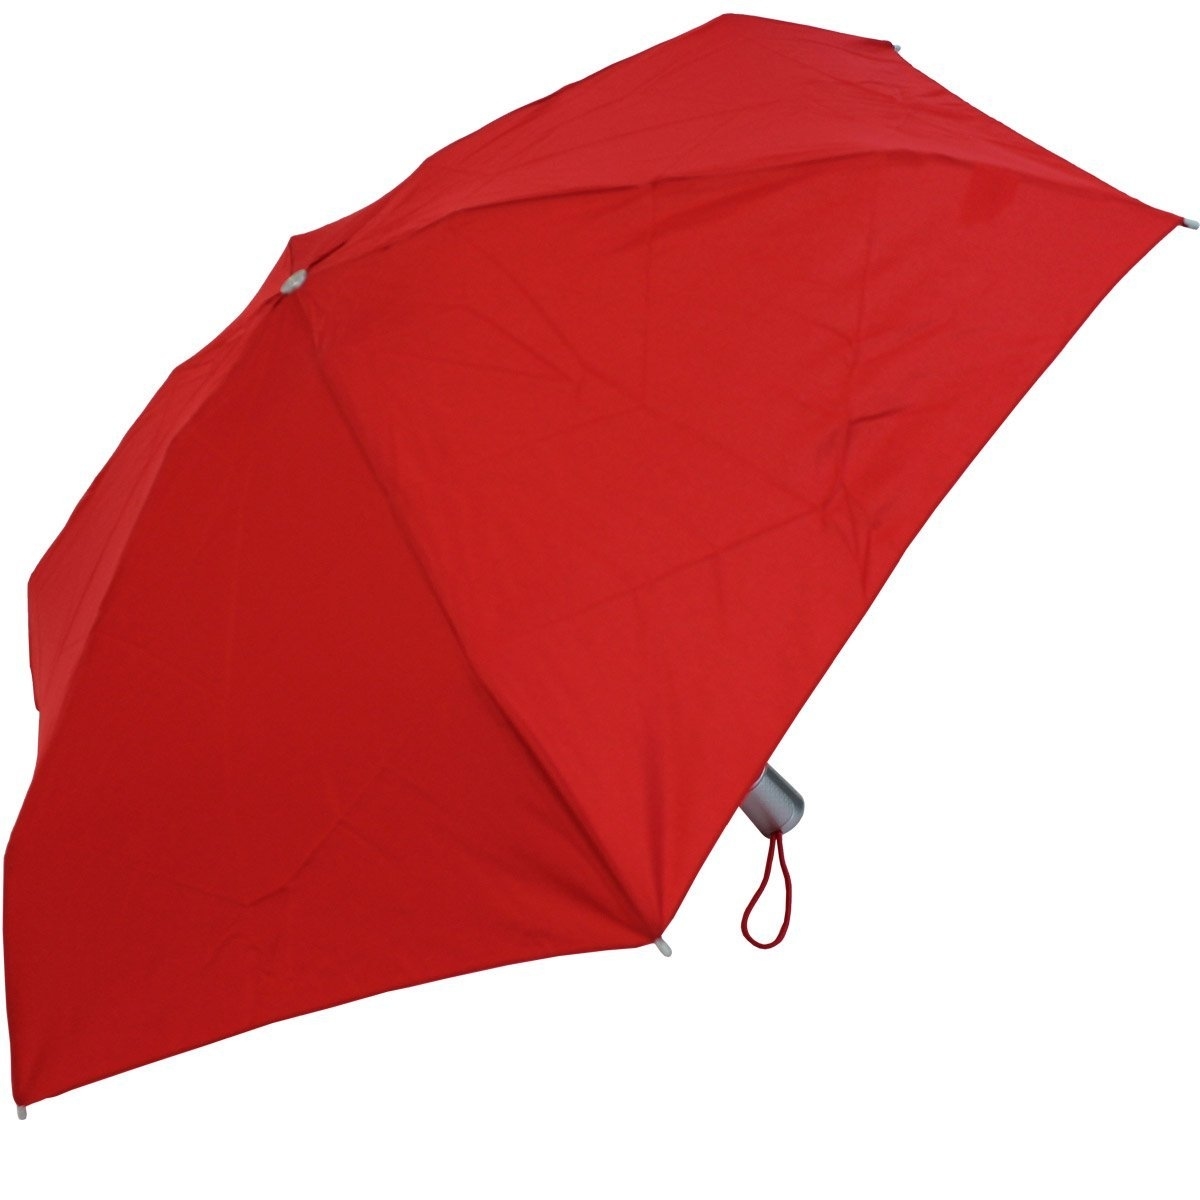 Alu Drop Regenschirm Auto in Tomato von Samsonite